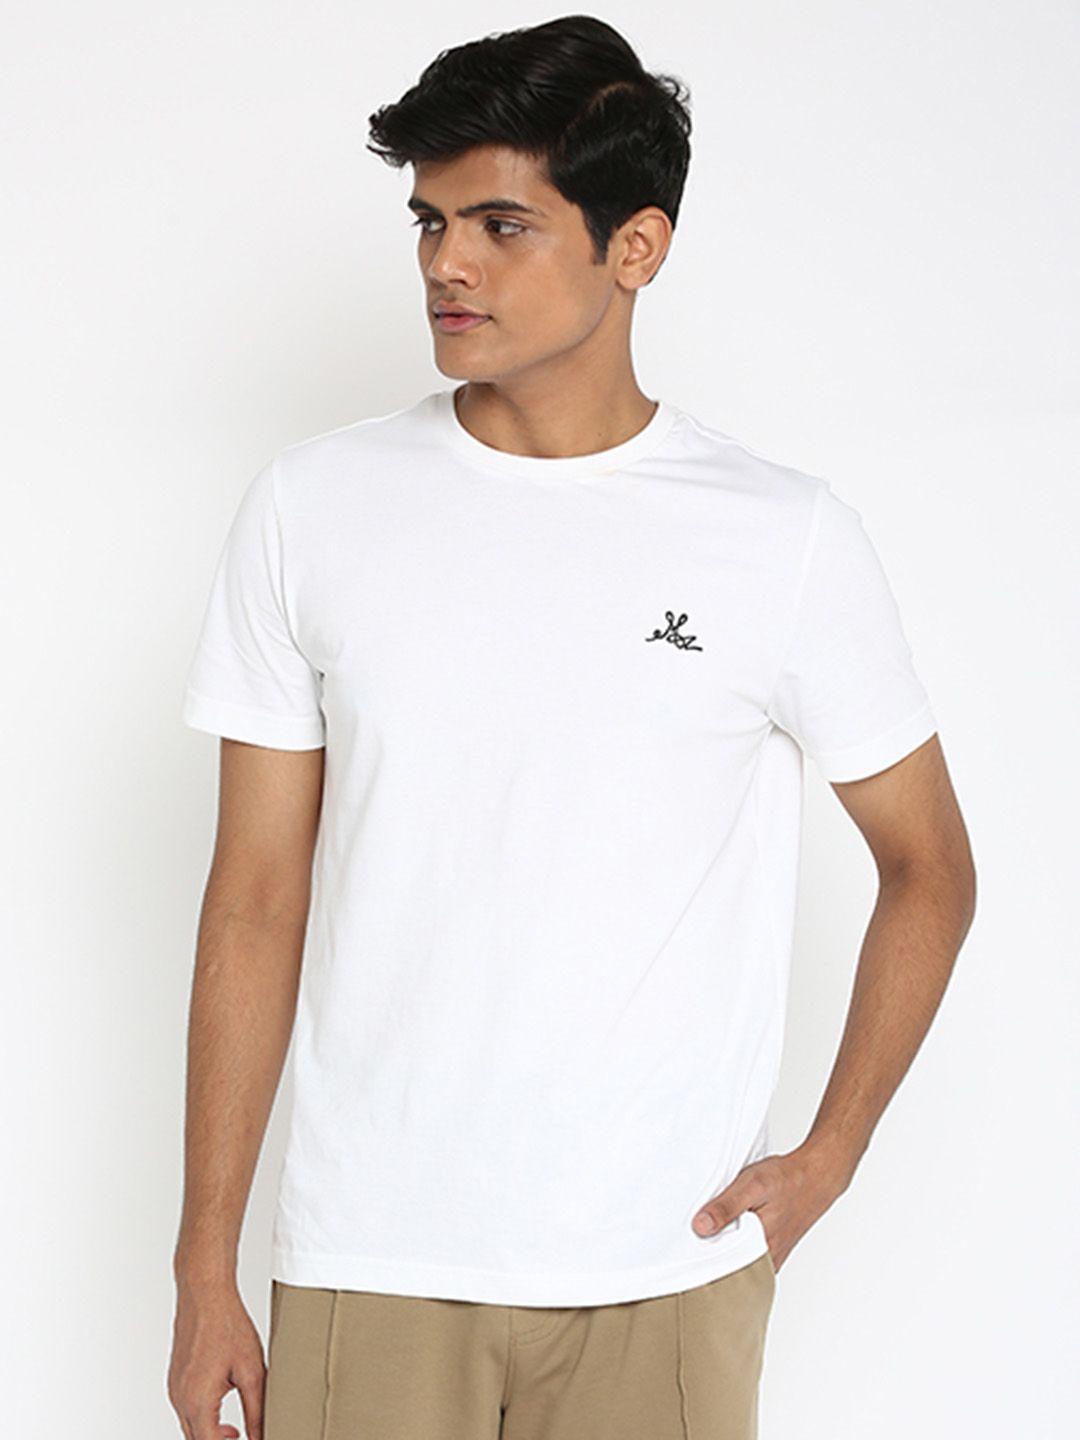 muvazo round neck short sleeves cotton t-shirt